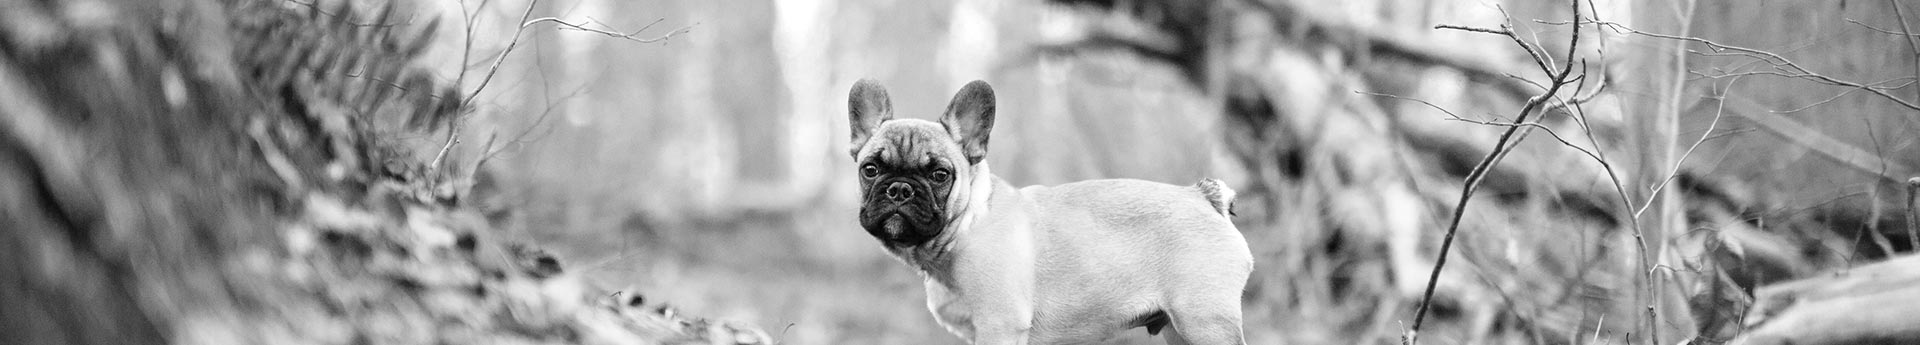 ORIJEN Puppy Dog Food - Boxer standing proud in woods - Reflective Echo from Laurel, Maryland